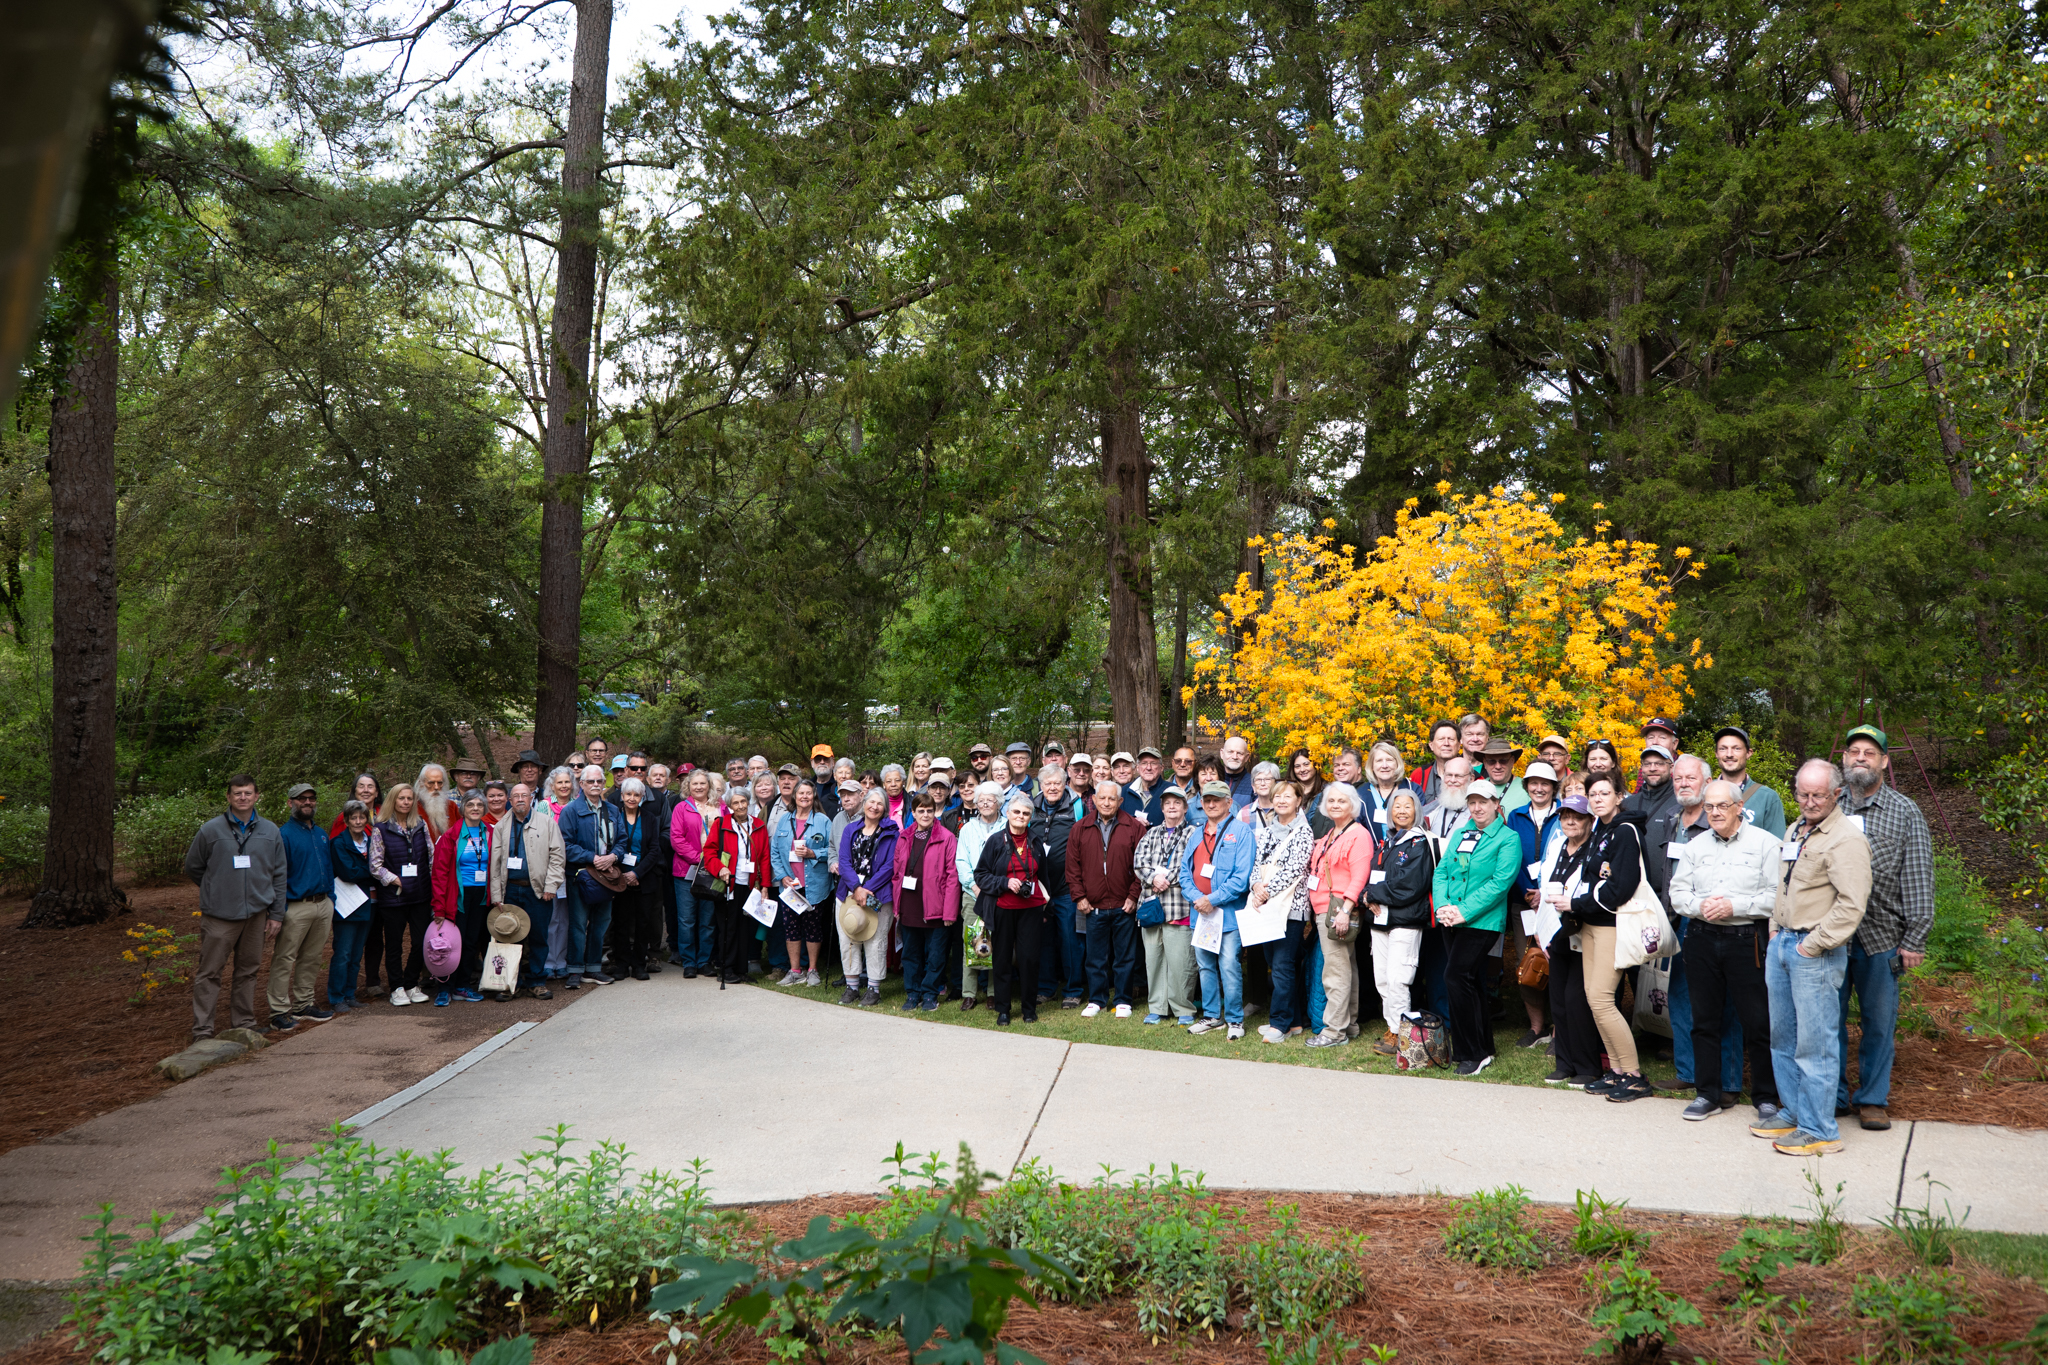 Convention attendees admire native Azaleas in bloom at the Davis Arboretum